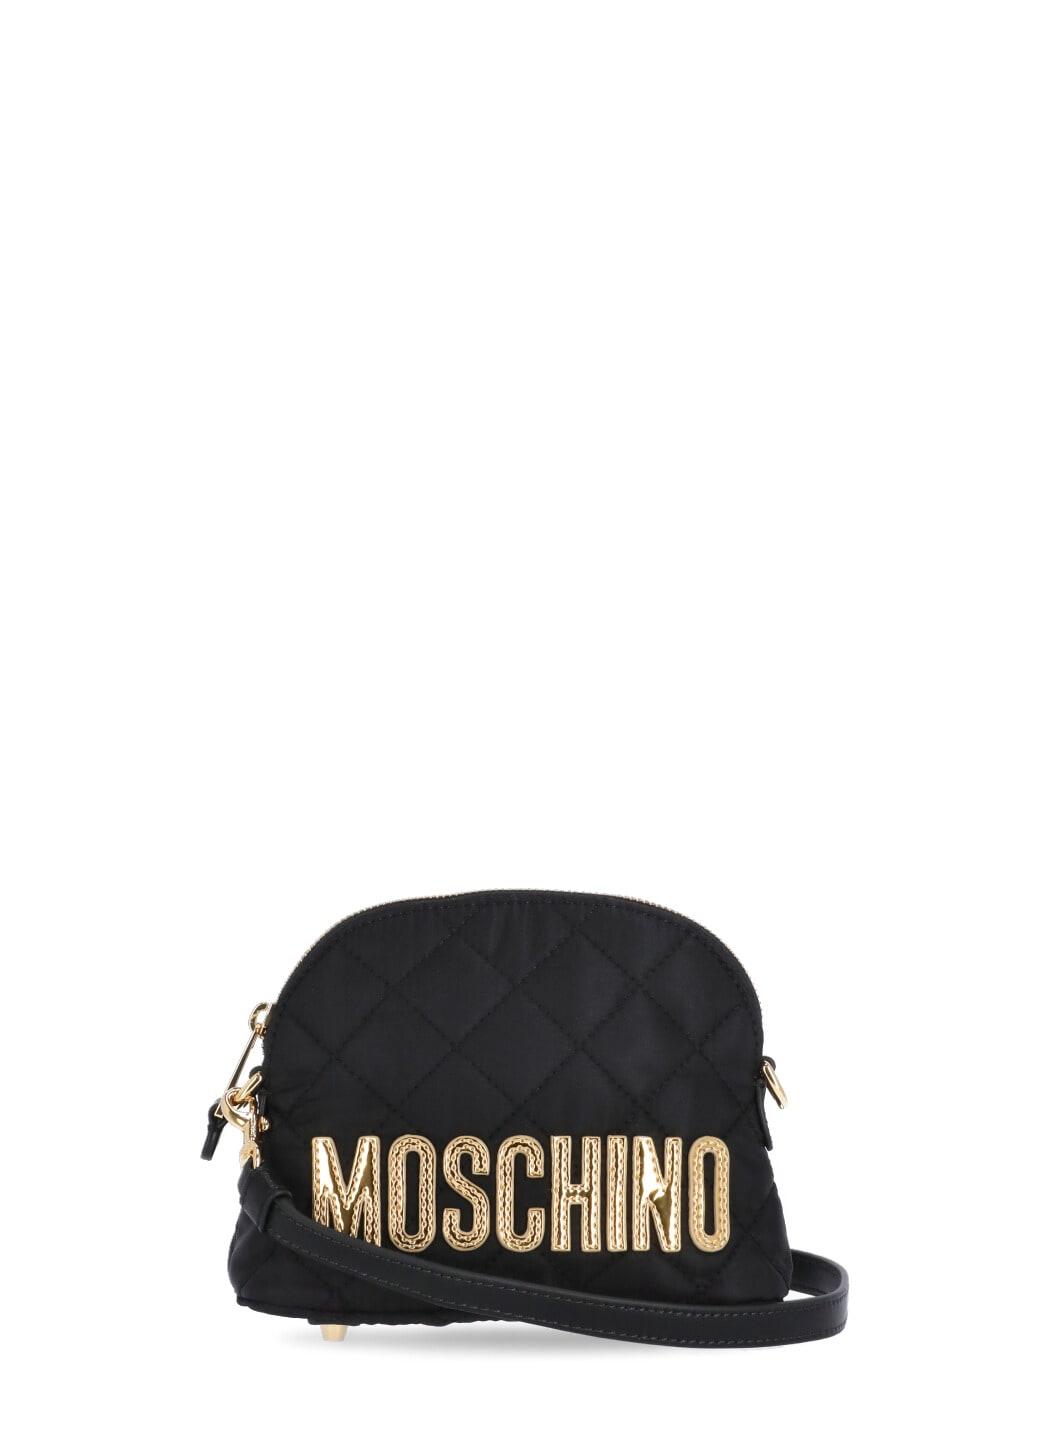 Moschino Pochette With Logo in Black | Lyst